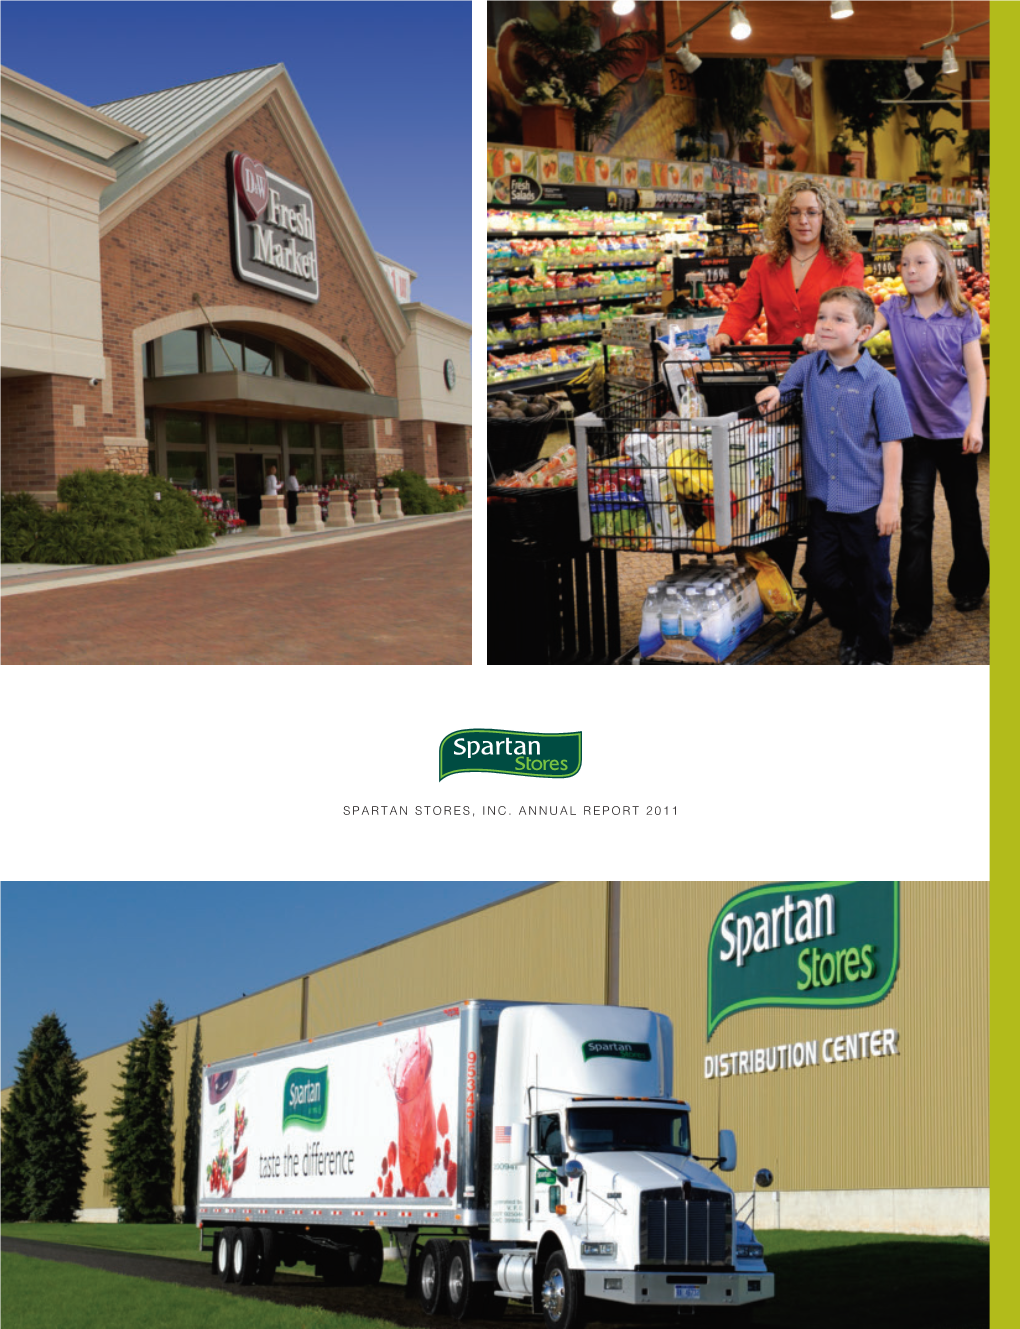 Spartan Stores, Inc. Annual Report 2011 Spartan Stores, Inc